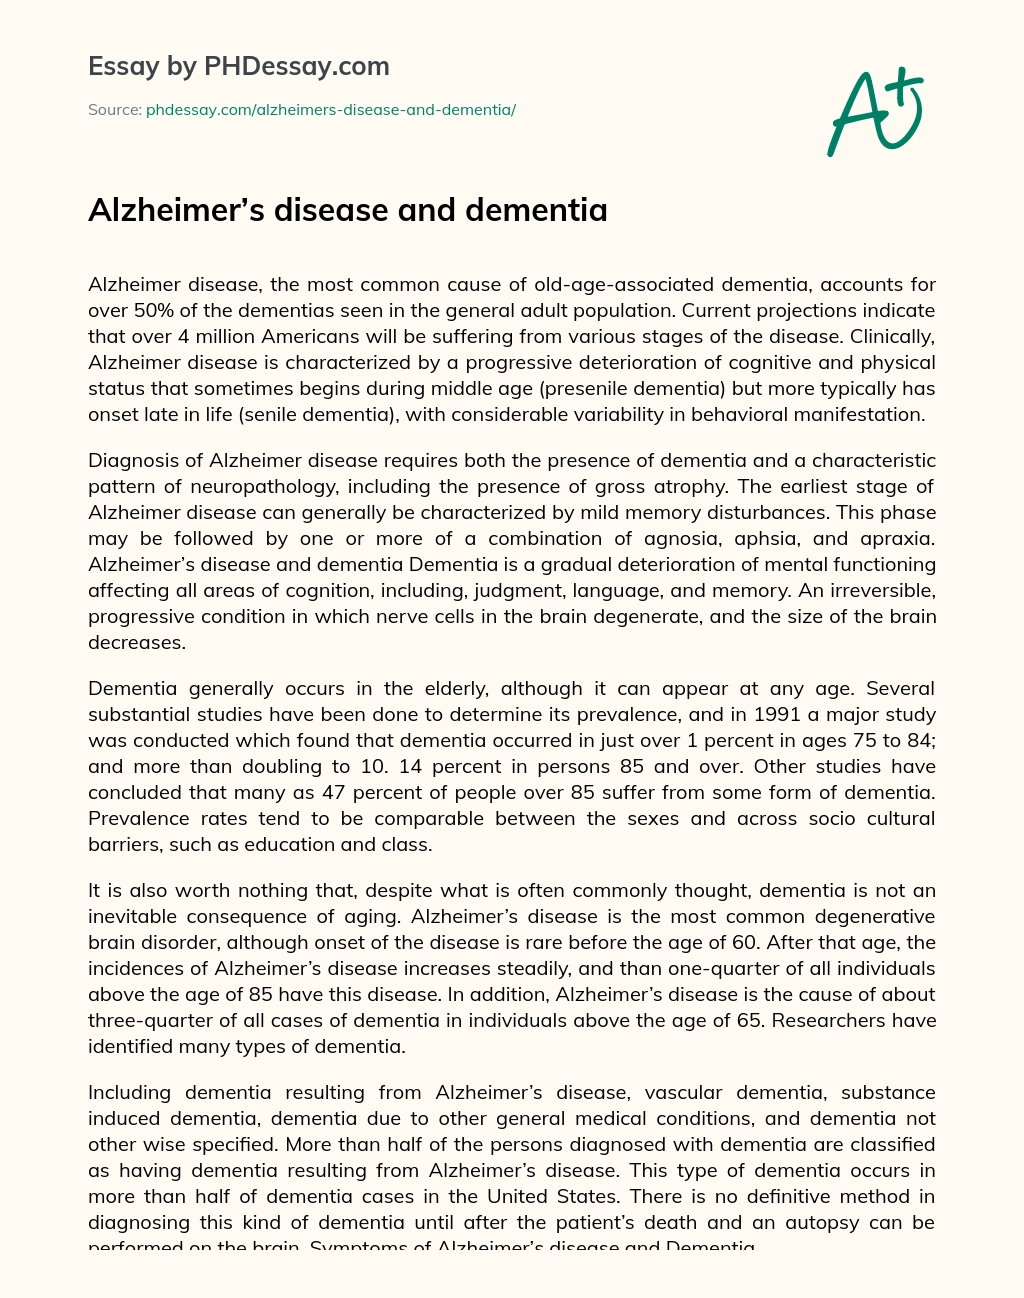 Alzheimer’s disease and dementia essay